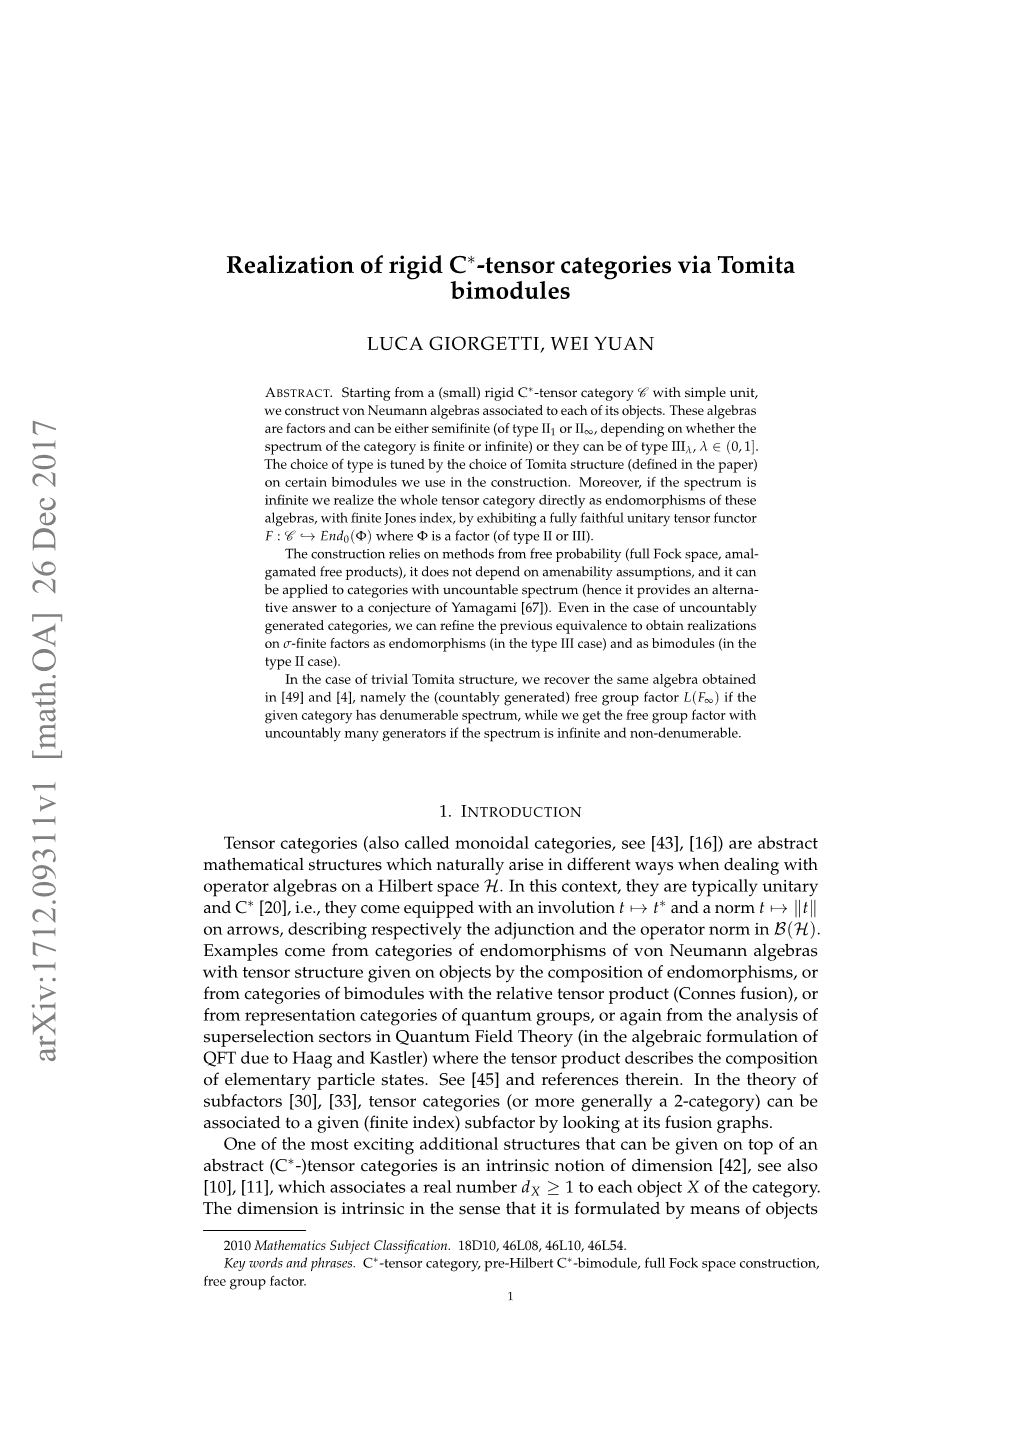 Realization of Rigid C $^* $-Tensor Categories Via Tomita Bimodules